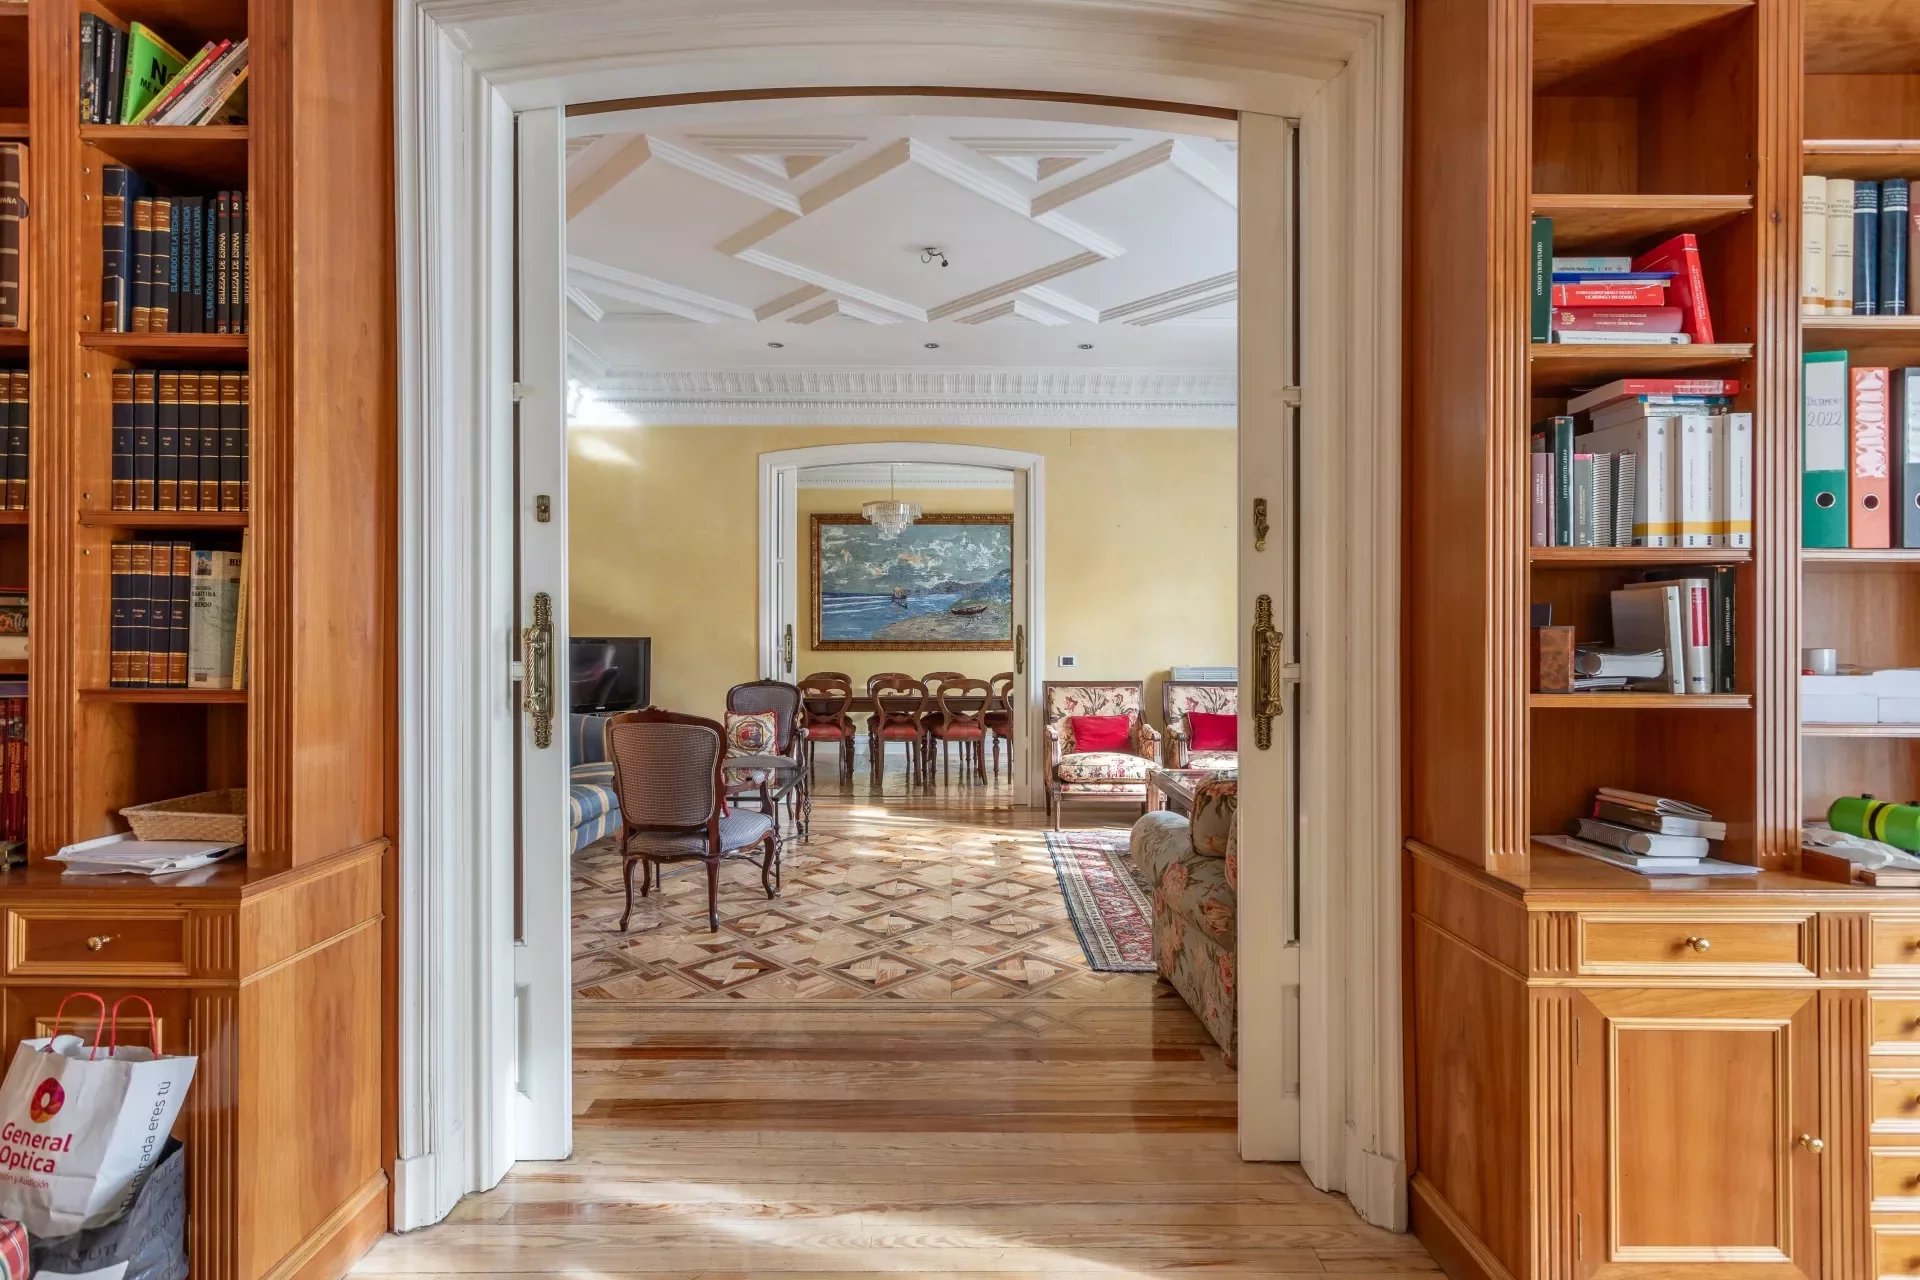 Exclusive apartment in the prestigious area of Almagro, Madrid - picture 5 title=